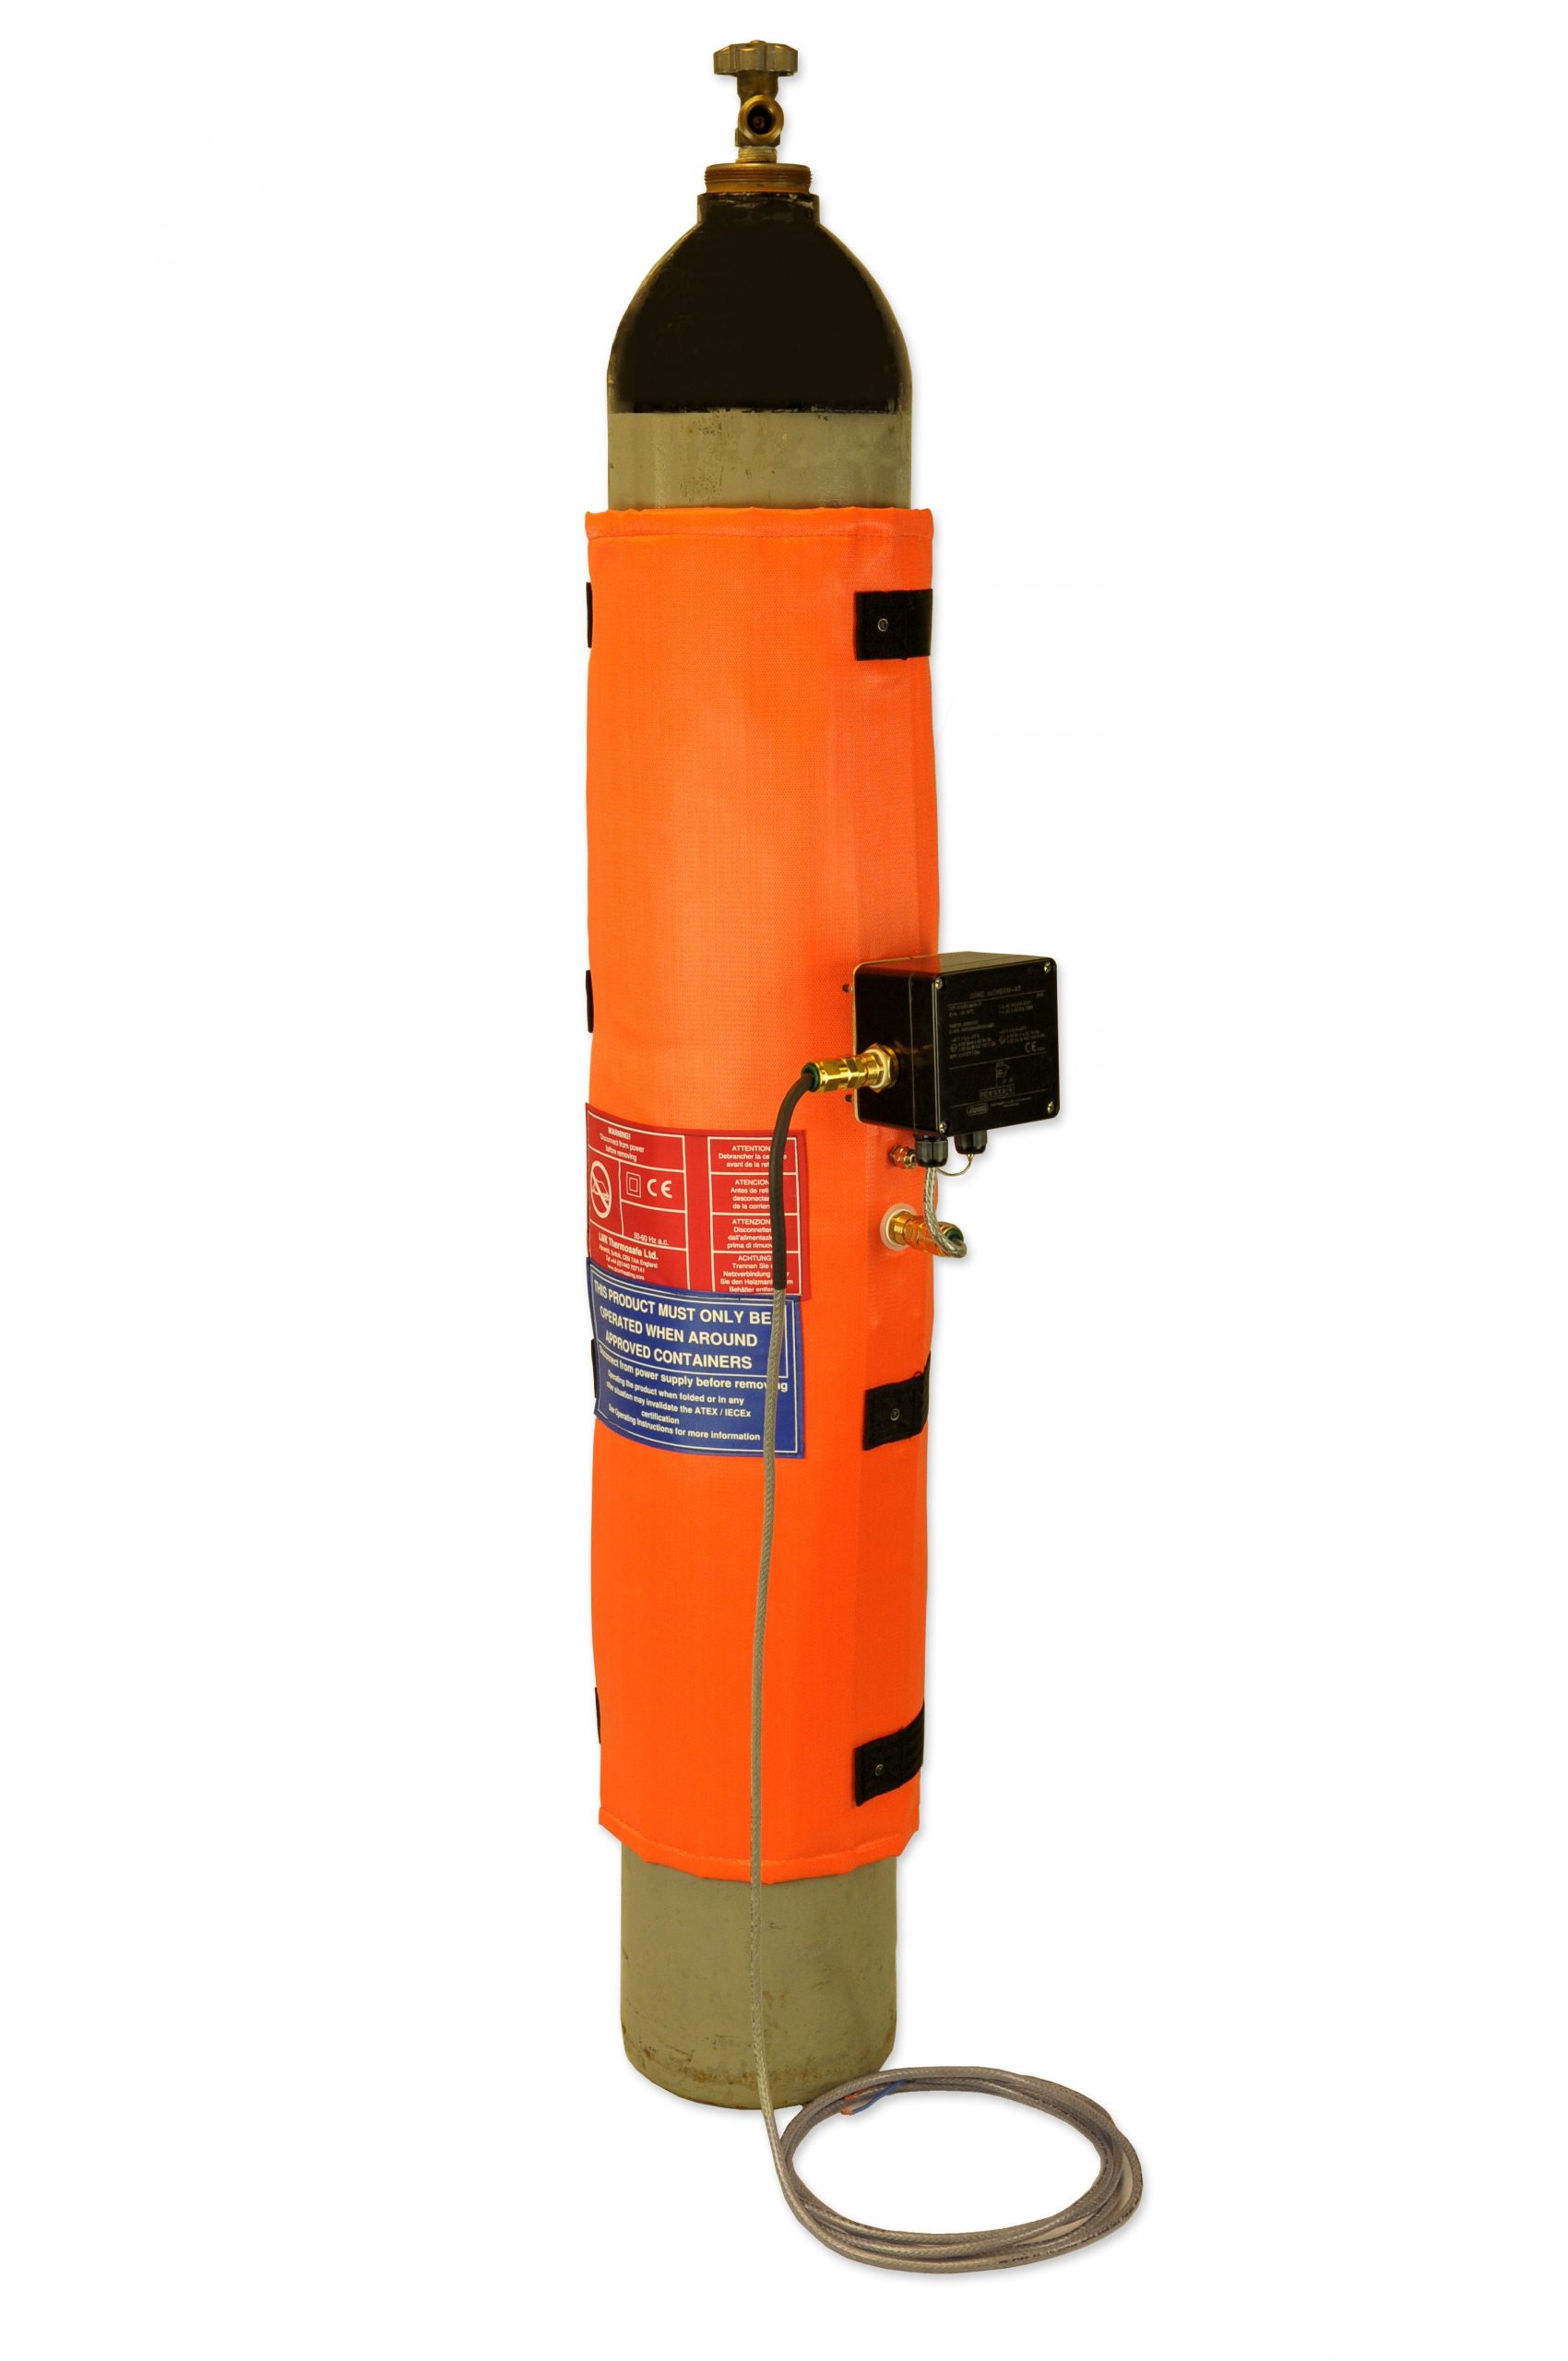 Intelliheat drum heater on a gas bottle